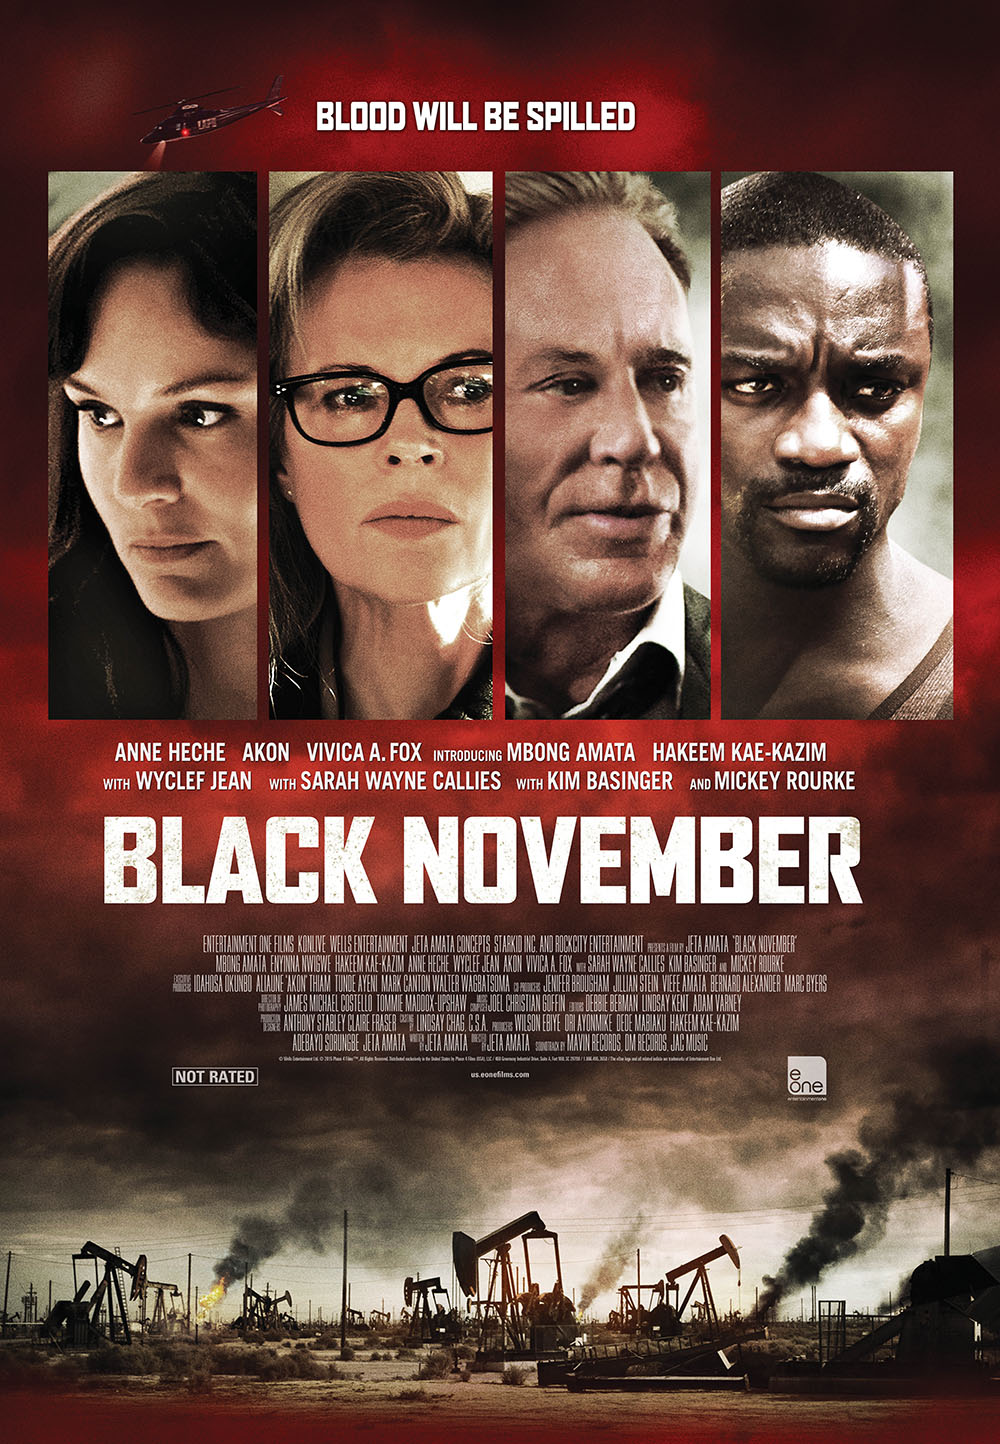 Kim Basinger, Mickey Rourke and Sarah Wayne Callies in Black November (2012)